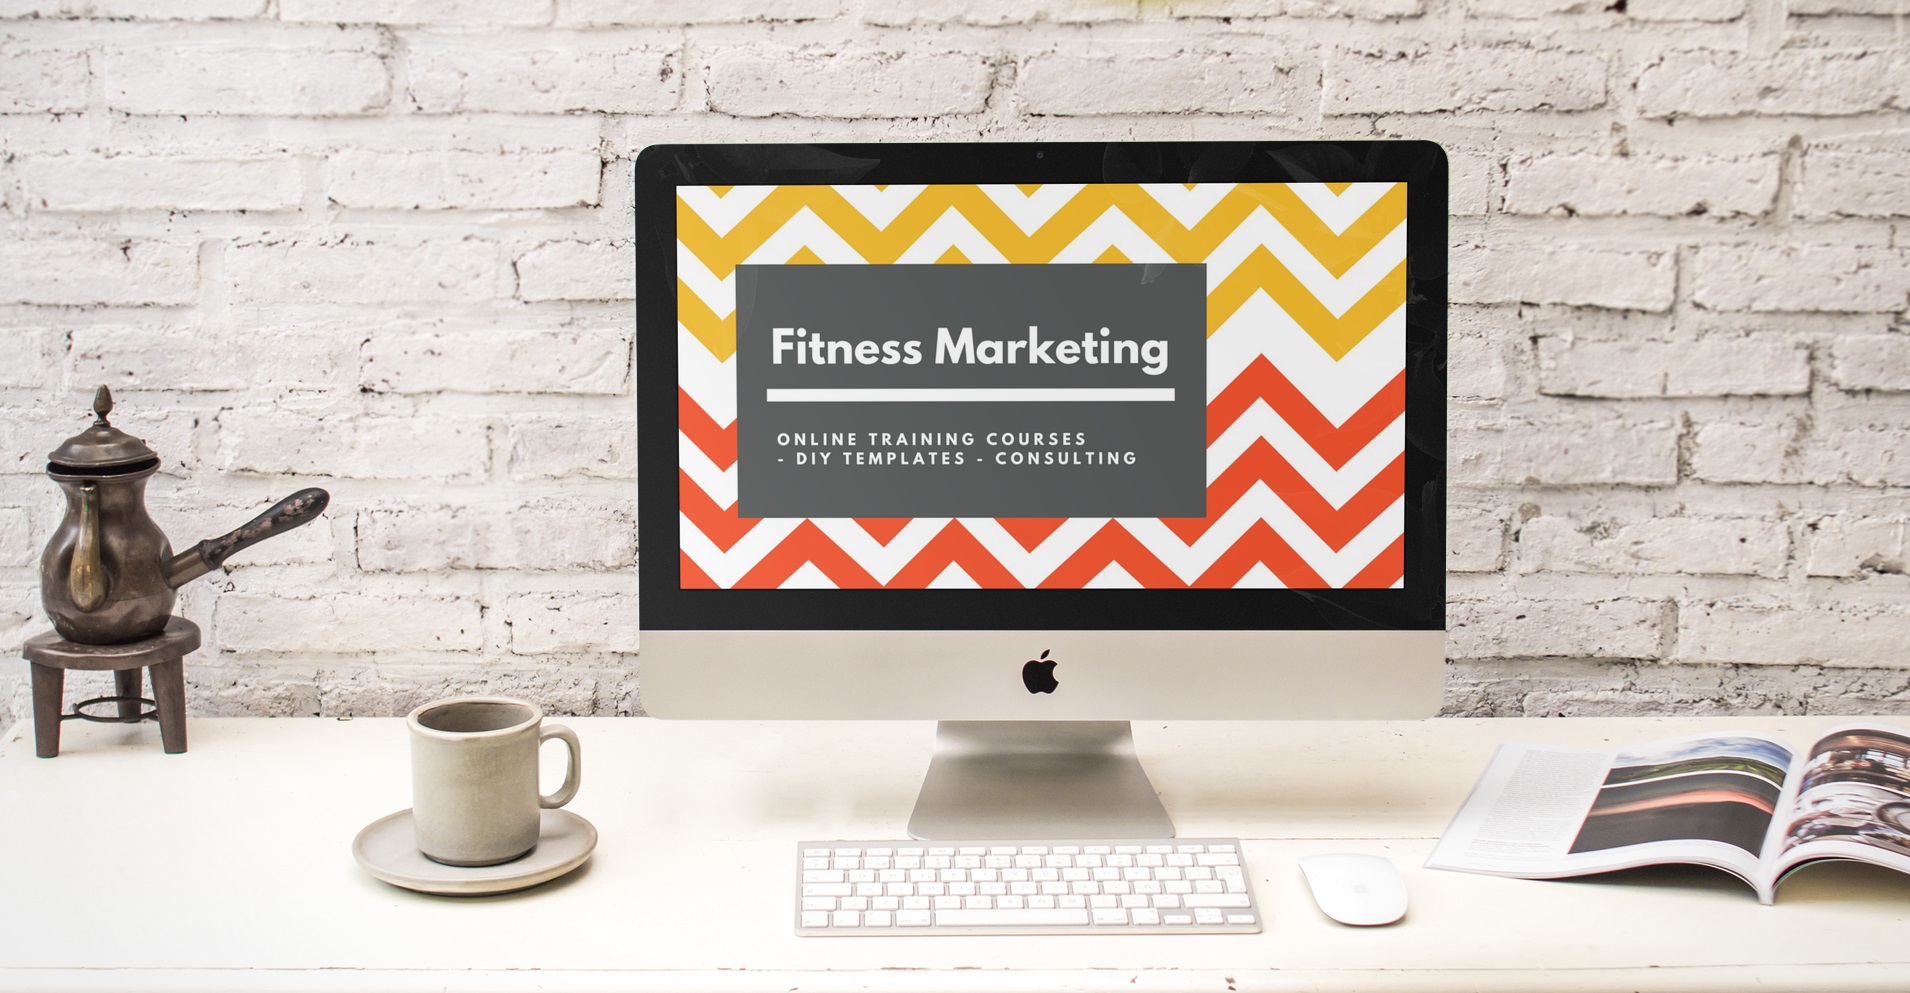 Fitness Marketing Company Homepage